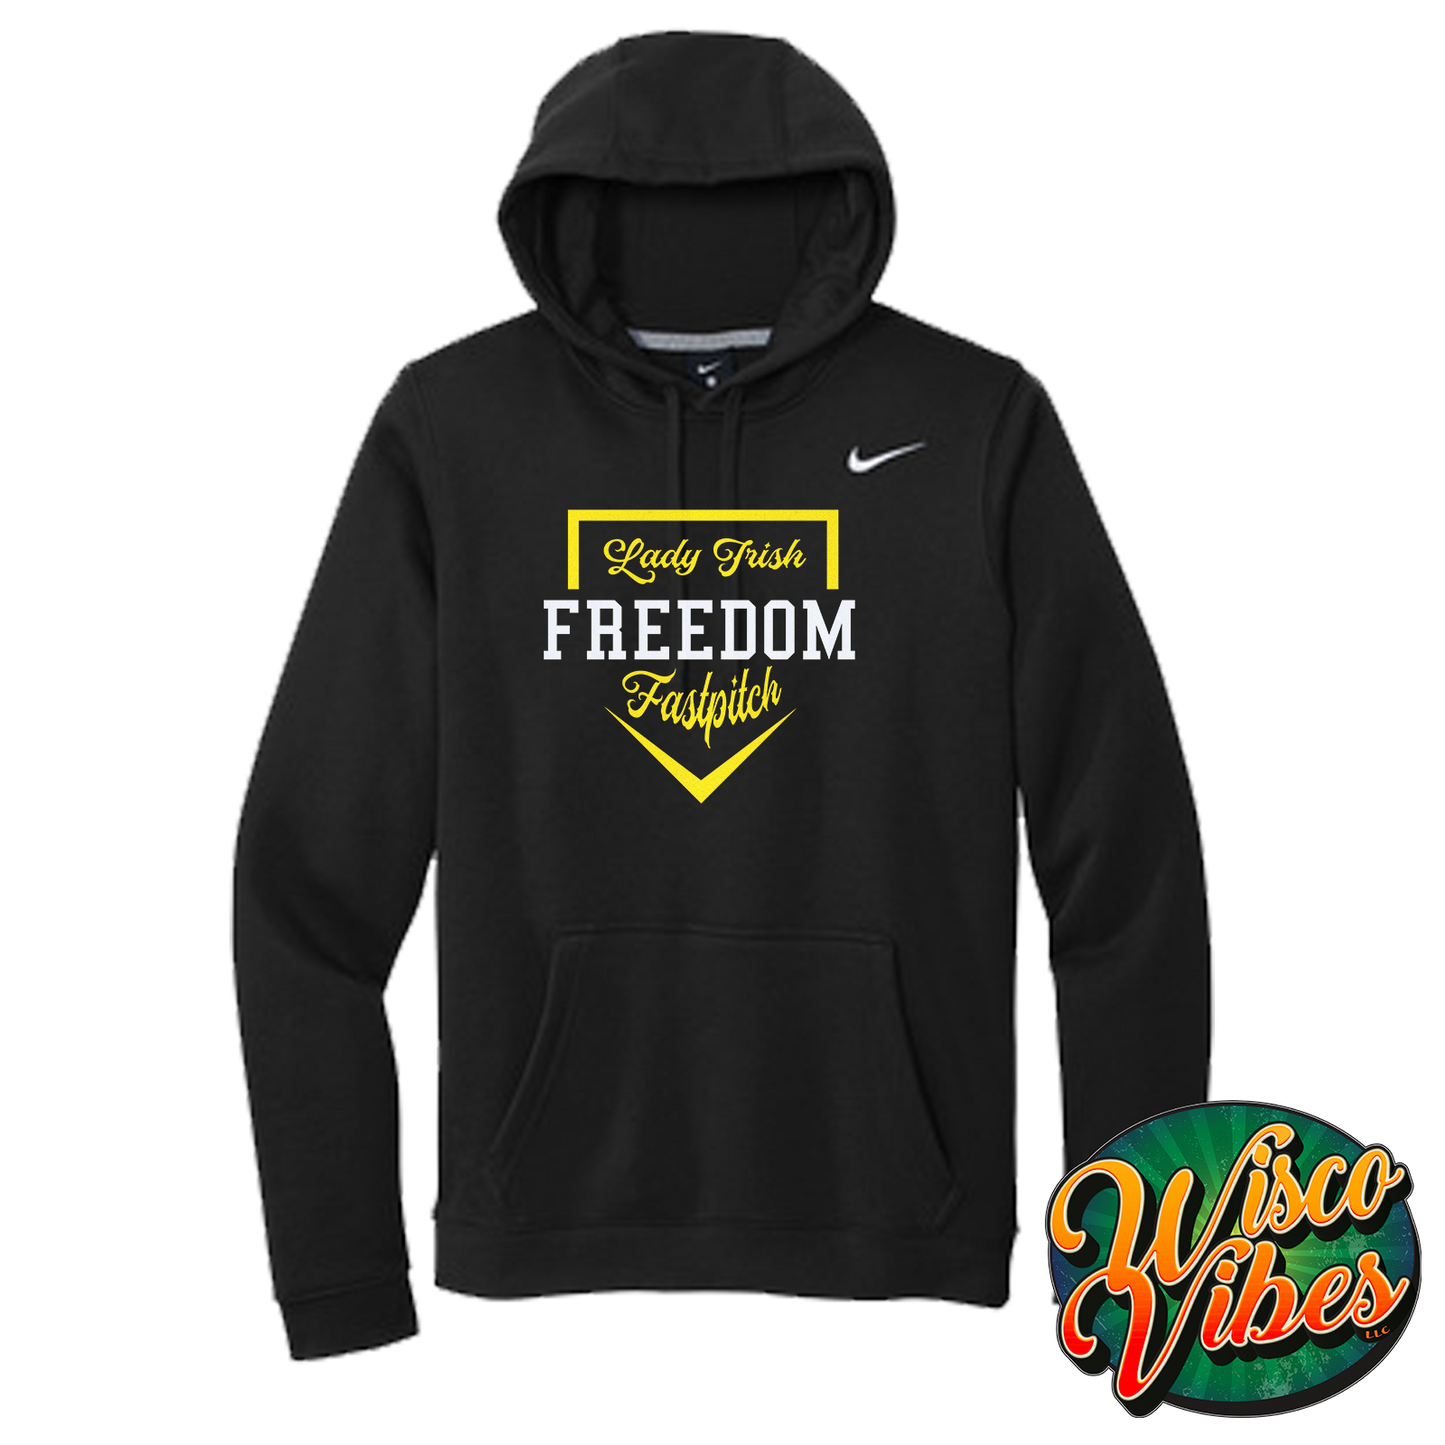 Nike Freedom Freedom Fastpitch Glitter Hooded Sweatshirt